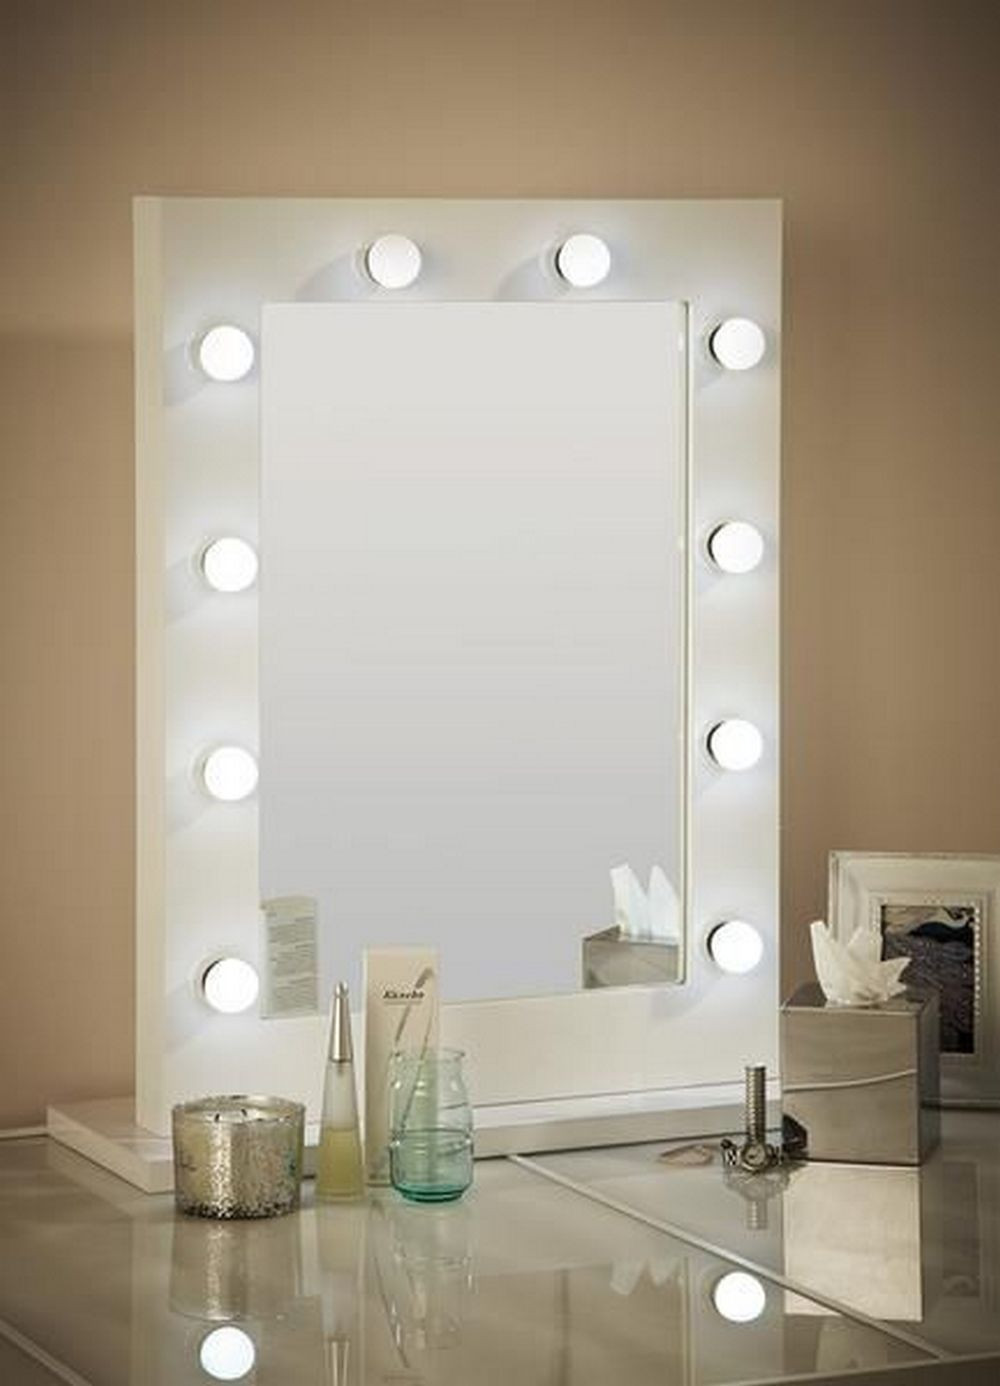 DIY Hollywood Lighted Vanity Mirror
 DIY Hollywood Lighted Vanity Mirror